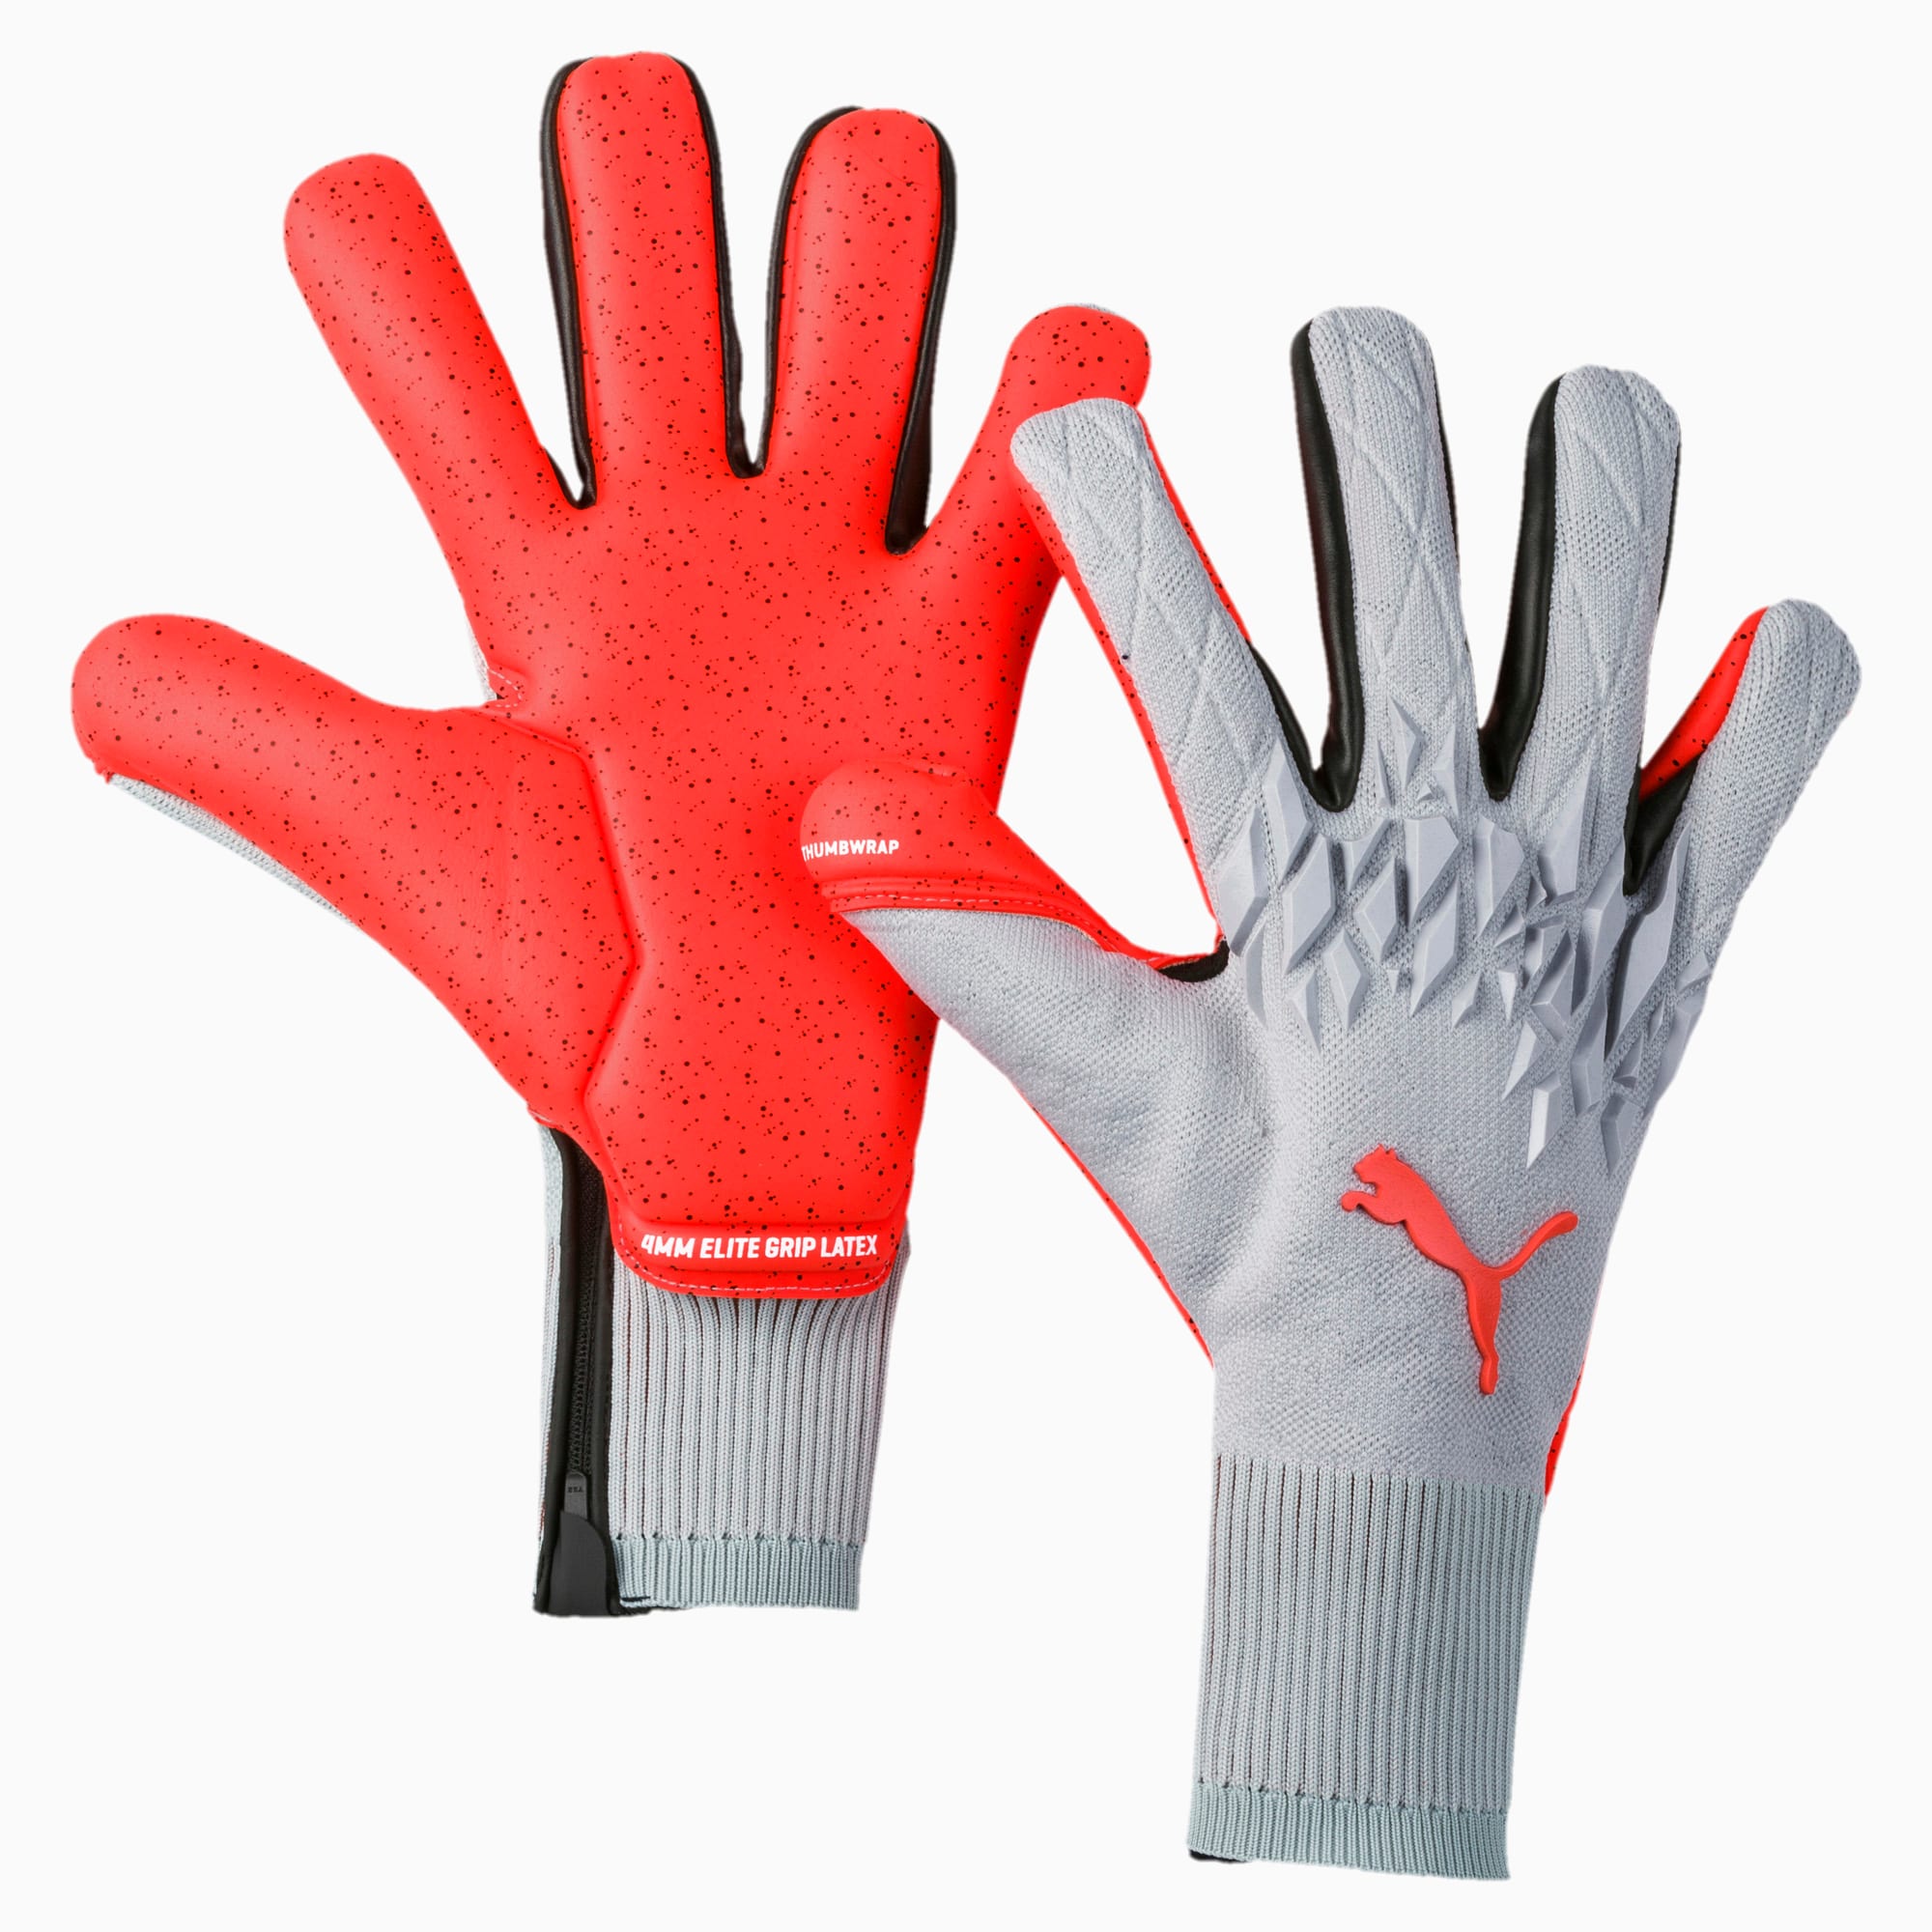 puma one gloves